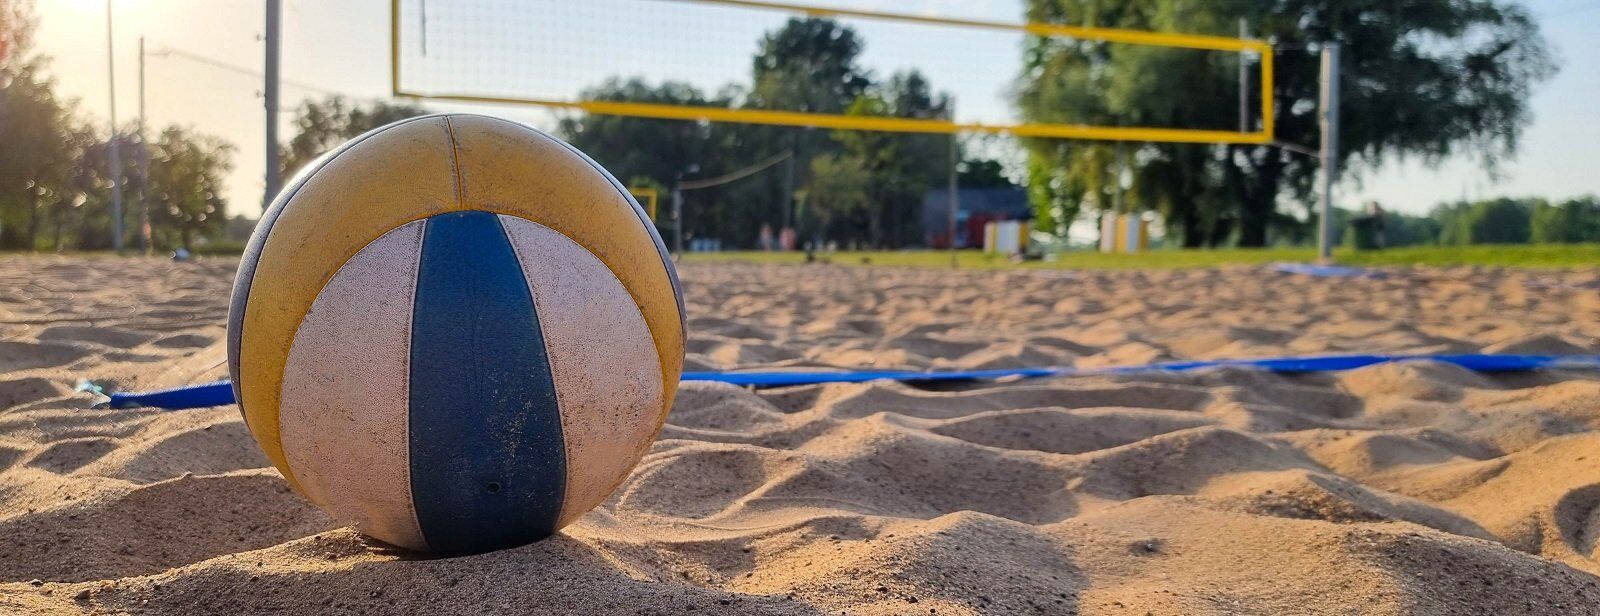 Beach volleyball net and ball rental in Minnesota